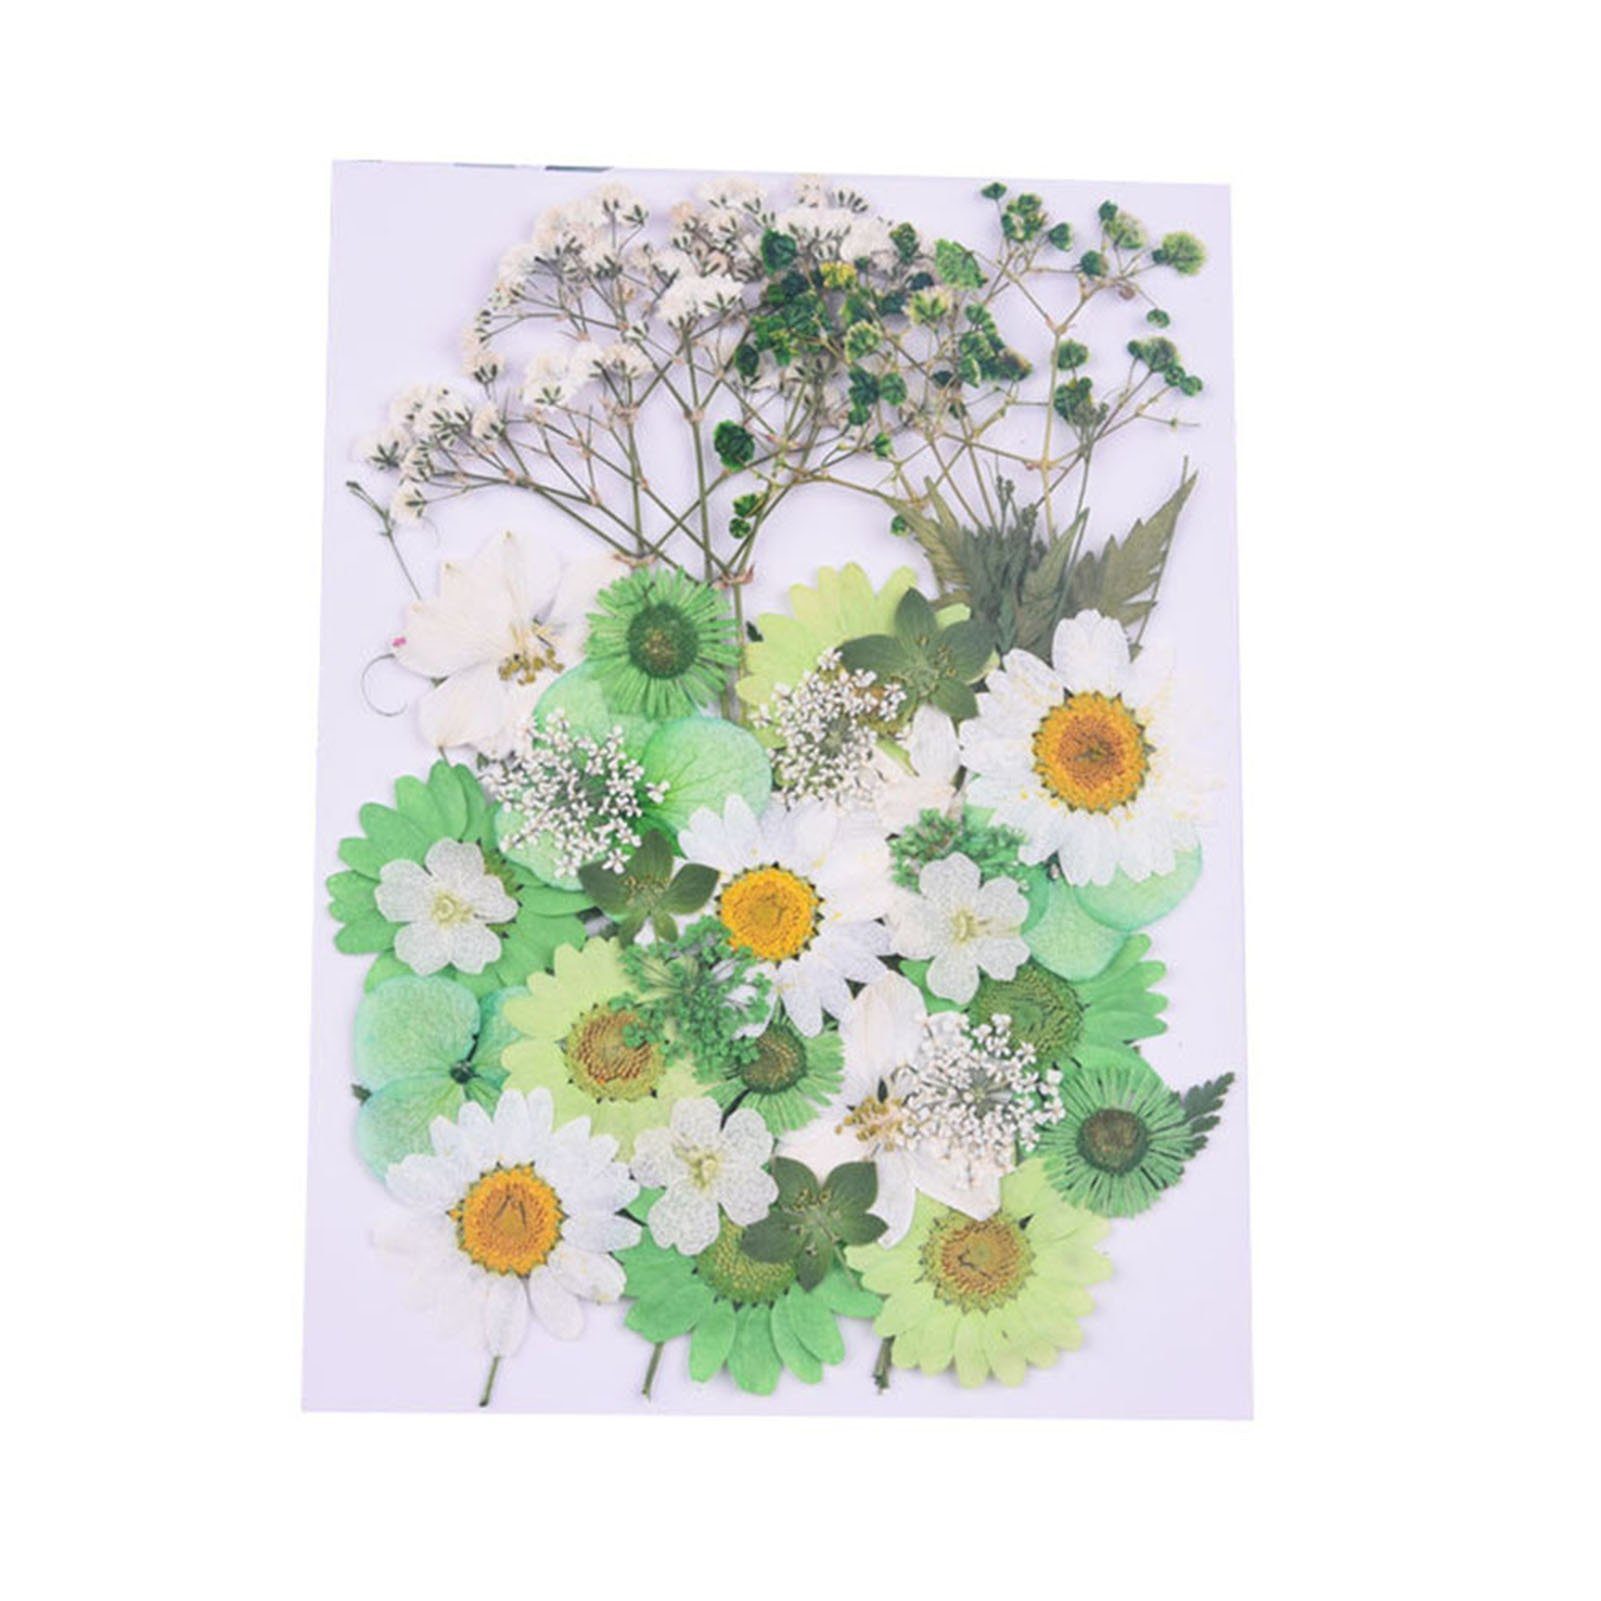 and Trockenblumen-Set Blumen, Getrocknetes, blue white Blusmart Zum Selbermachen, Trockenblume Gepresste